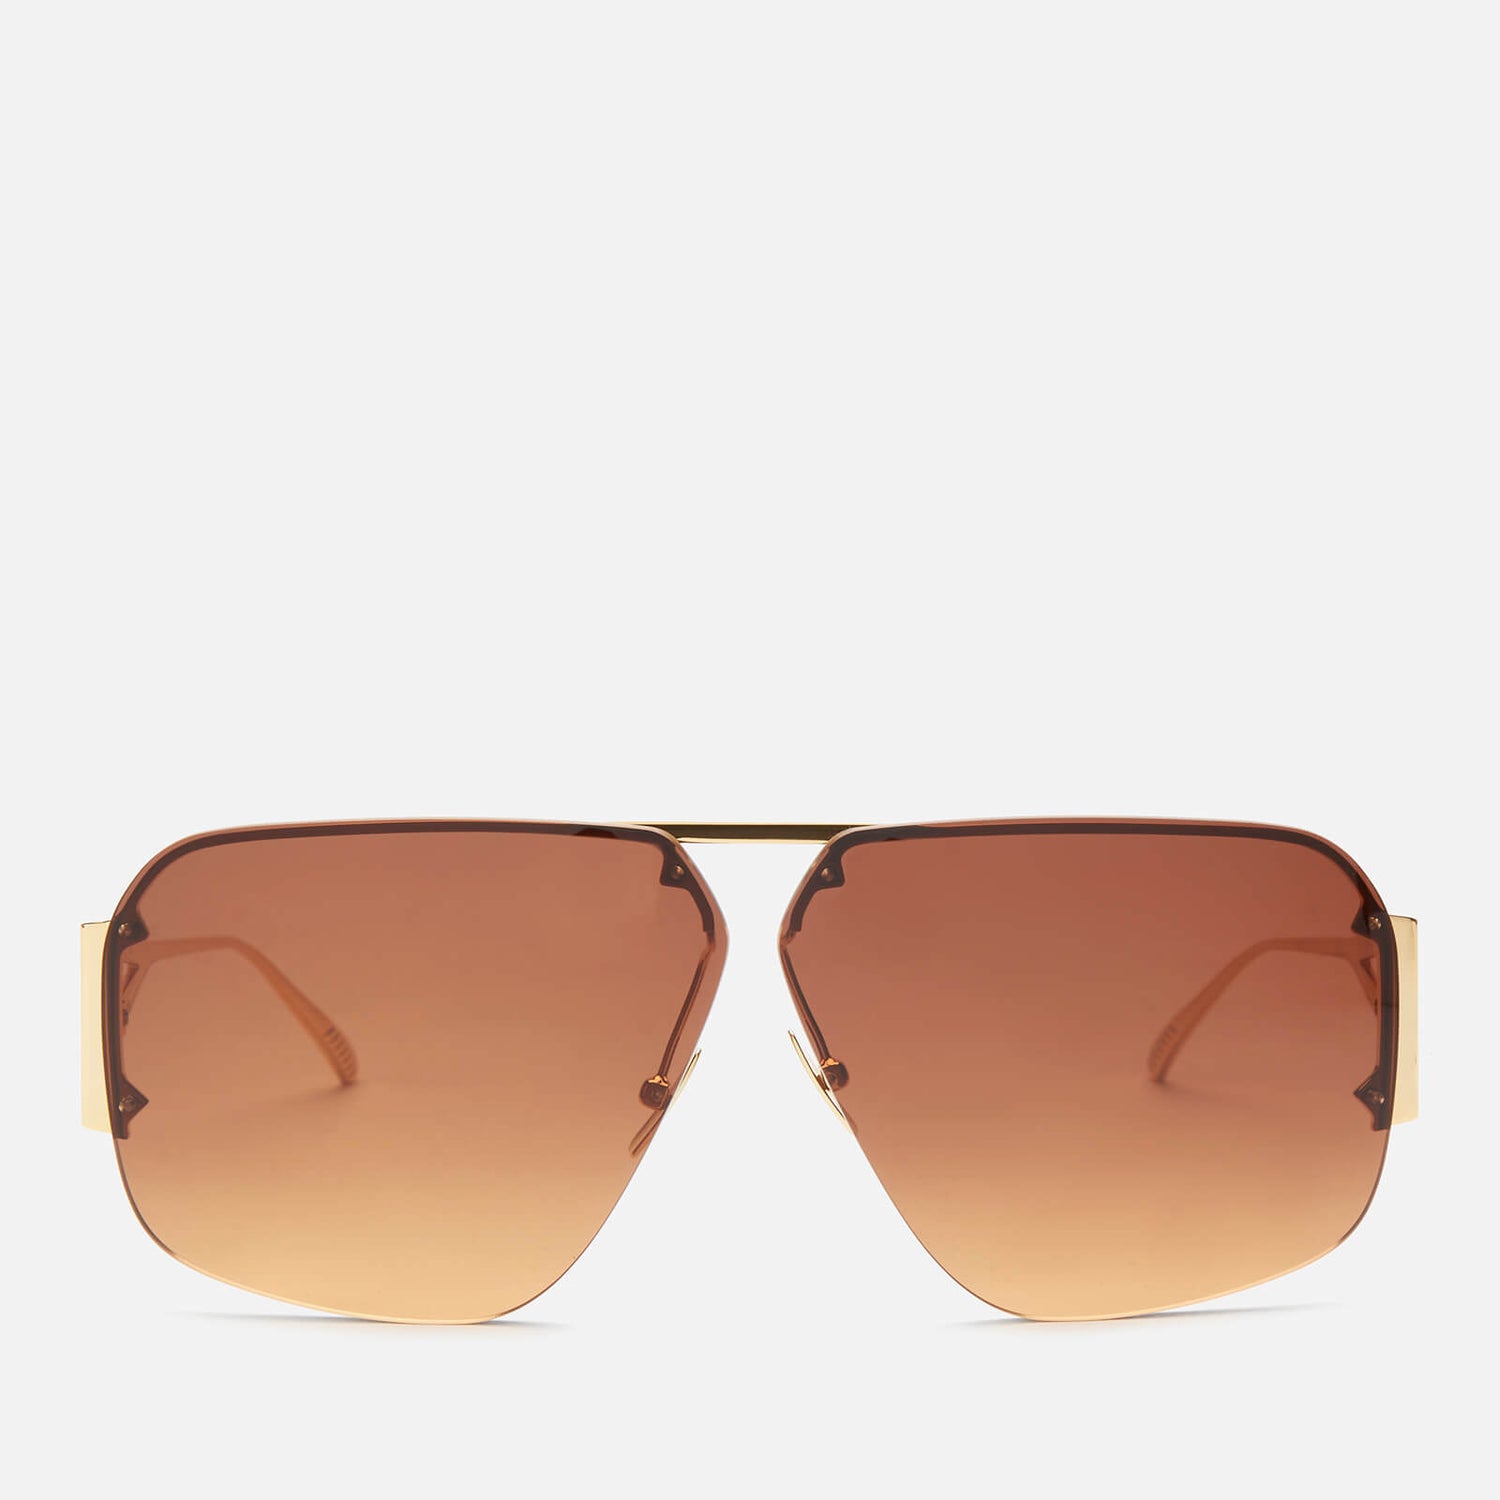 Bottega Veneta Women's Aviator Sunglasses - Gold/Orange